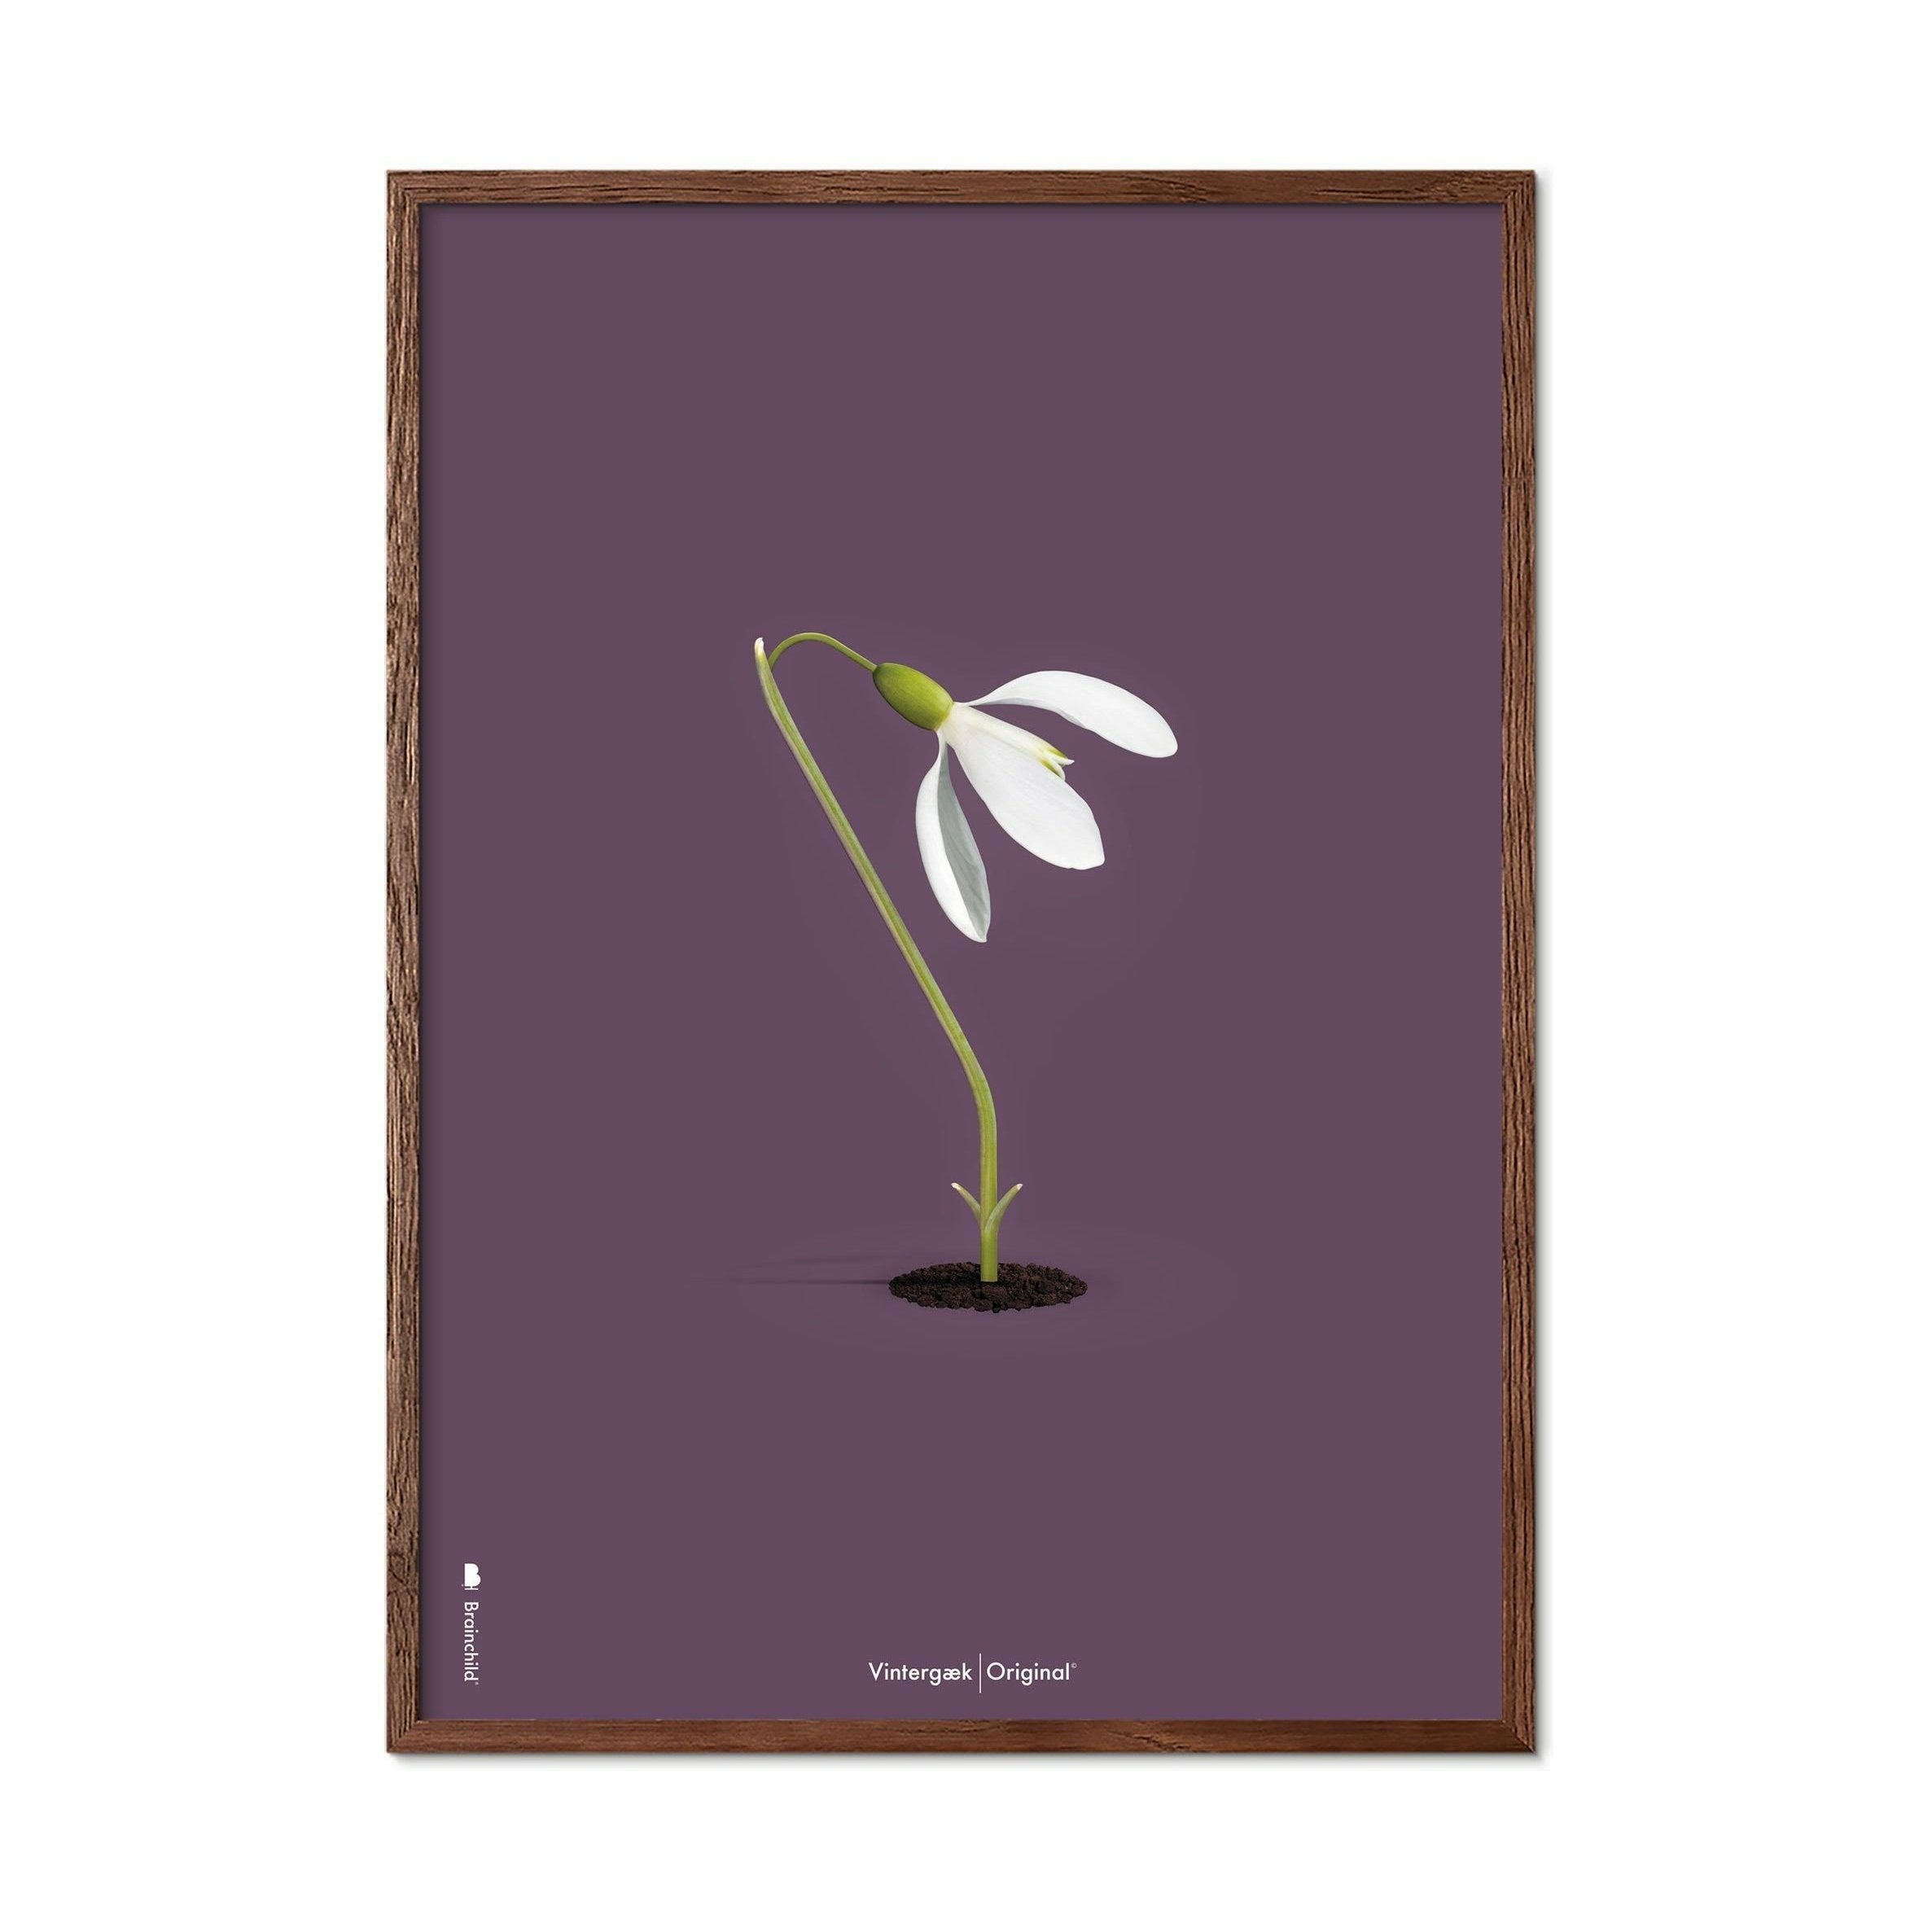 Brainchild Snowdrop Classic Poster, Frame Made Of Dark Wood 50x70 Cm, Purple Background